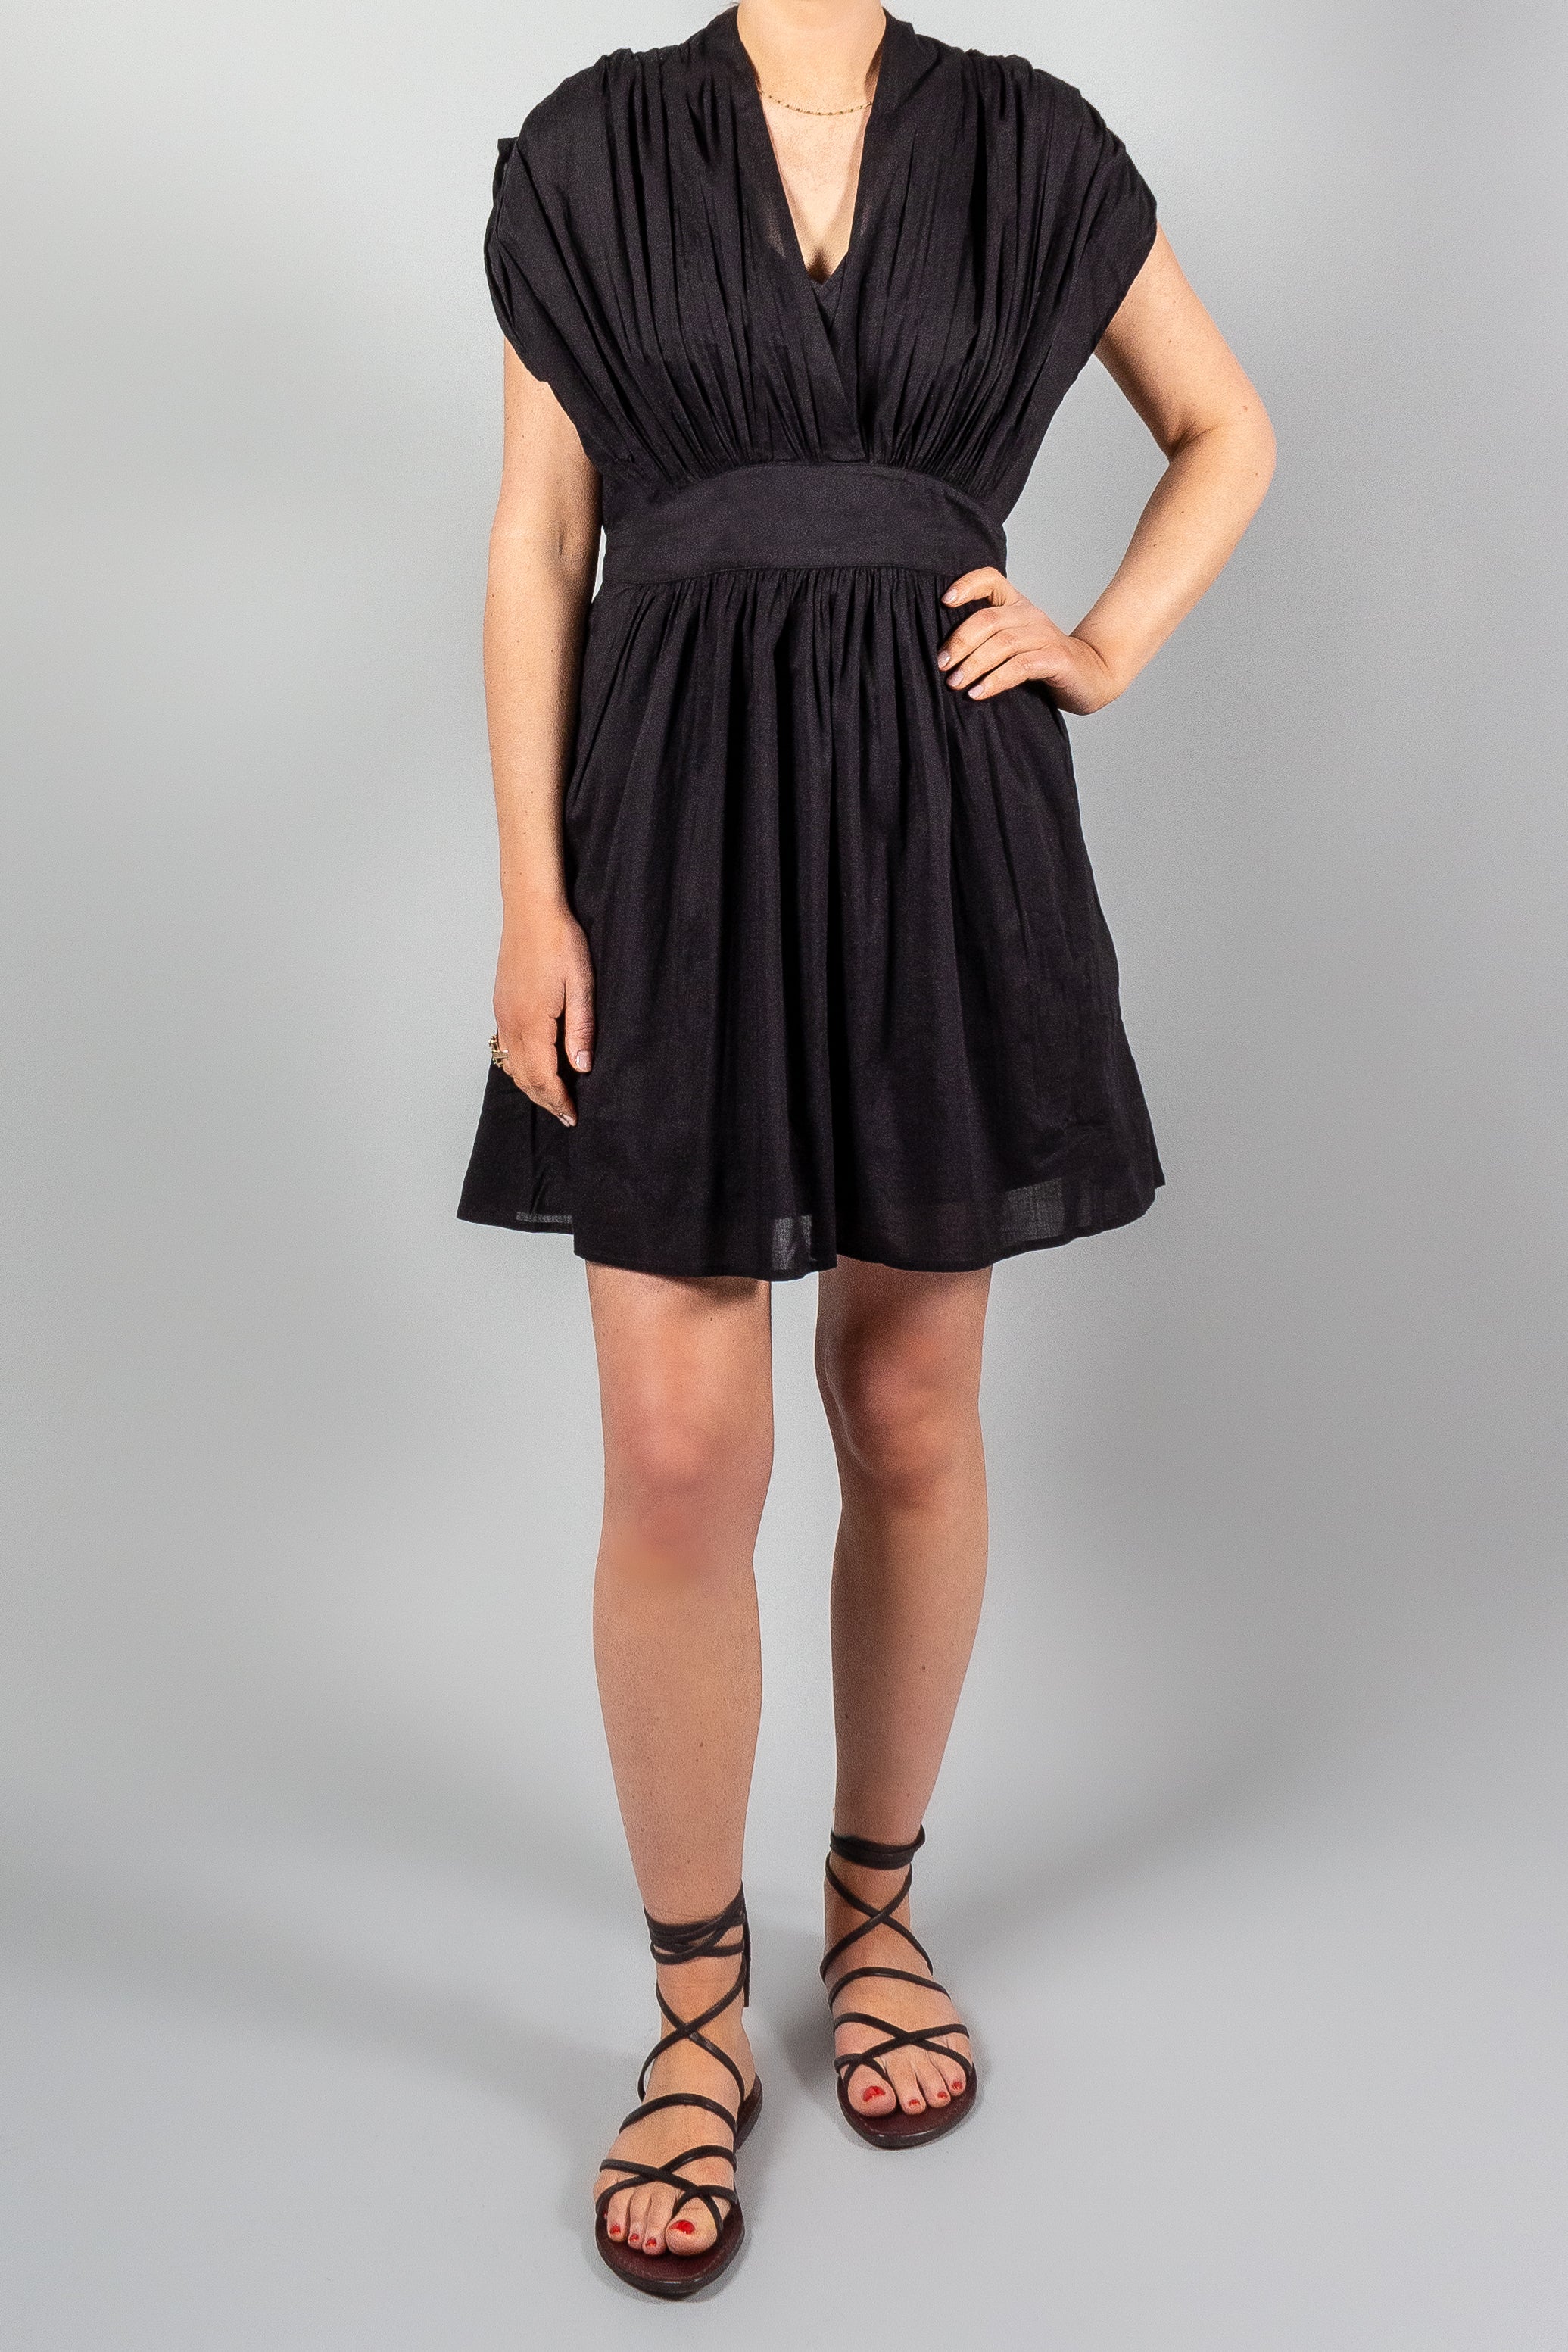 Xirena Brinsley Dress-Dresses and Jumpsuits-Misch-Boutique-Vancouver-Canada-misch.ca